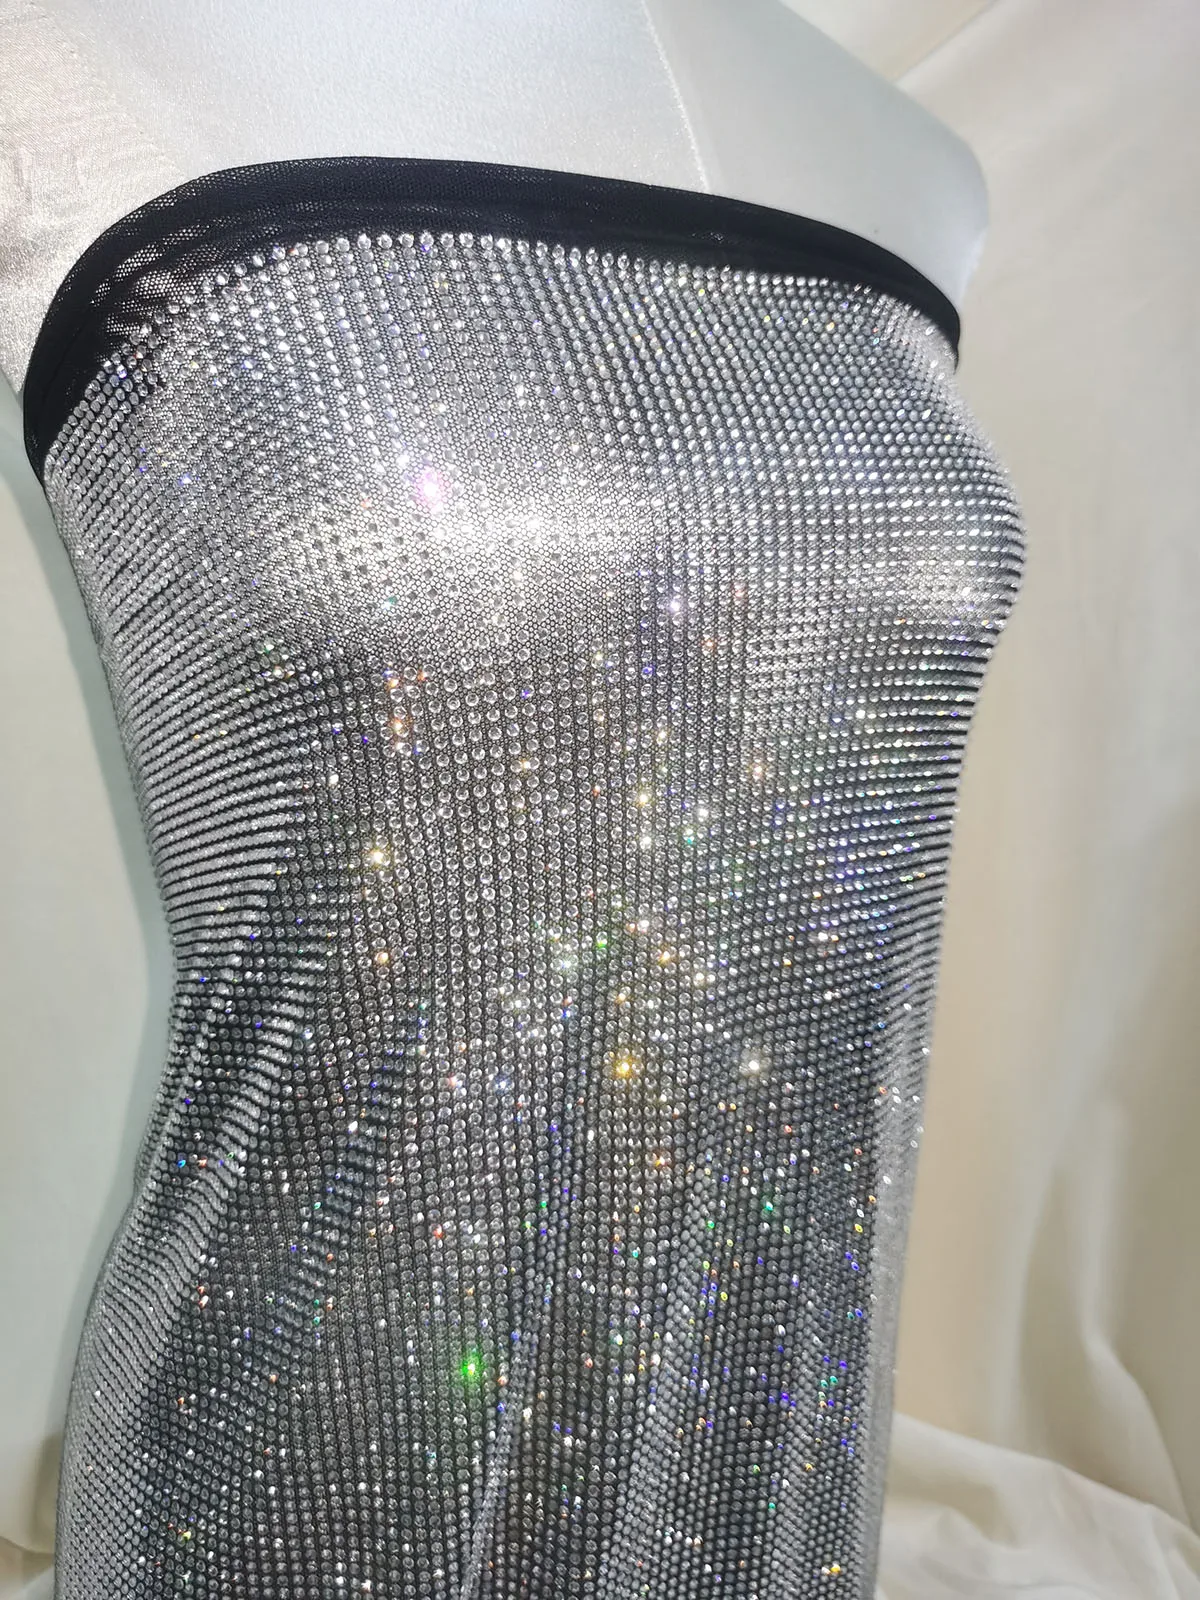 Rhinestone Mesh Fabric Nude Flesh color Spandex Elastic Crystal Net Trim  Transparent Fishnet Sexy Apparel Clothing Customize